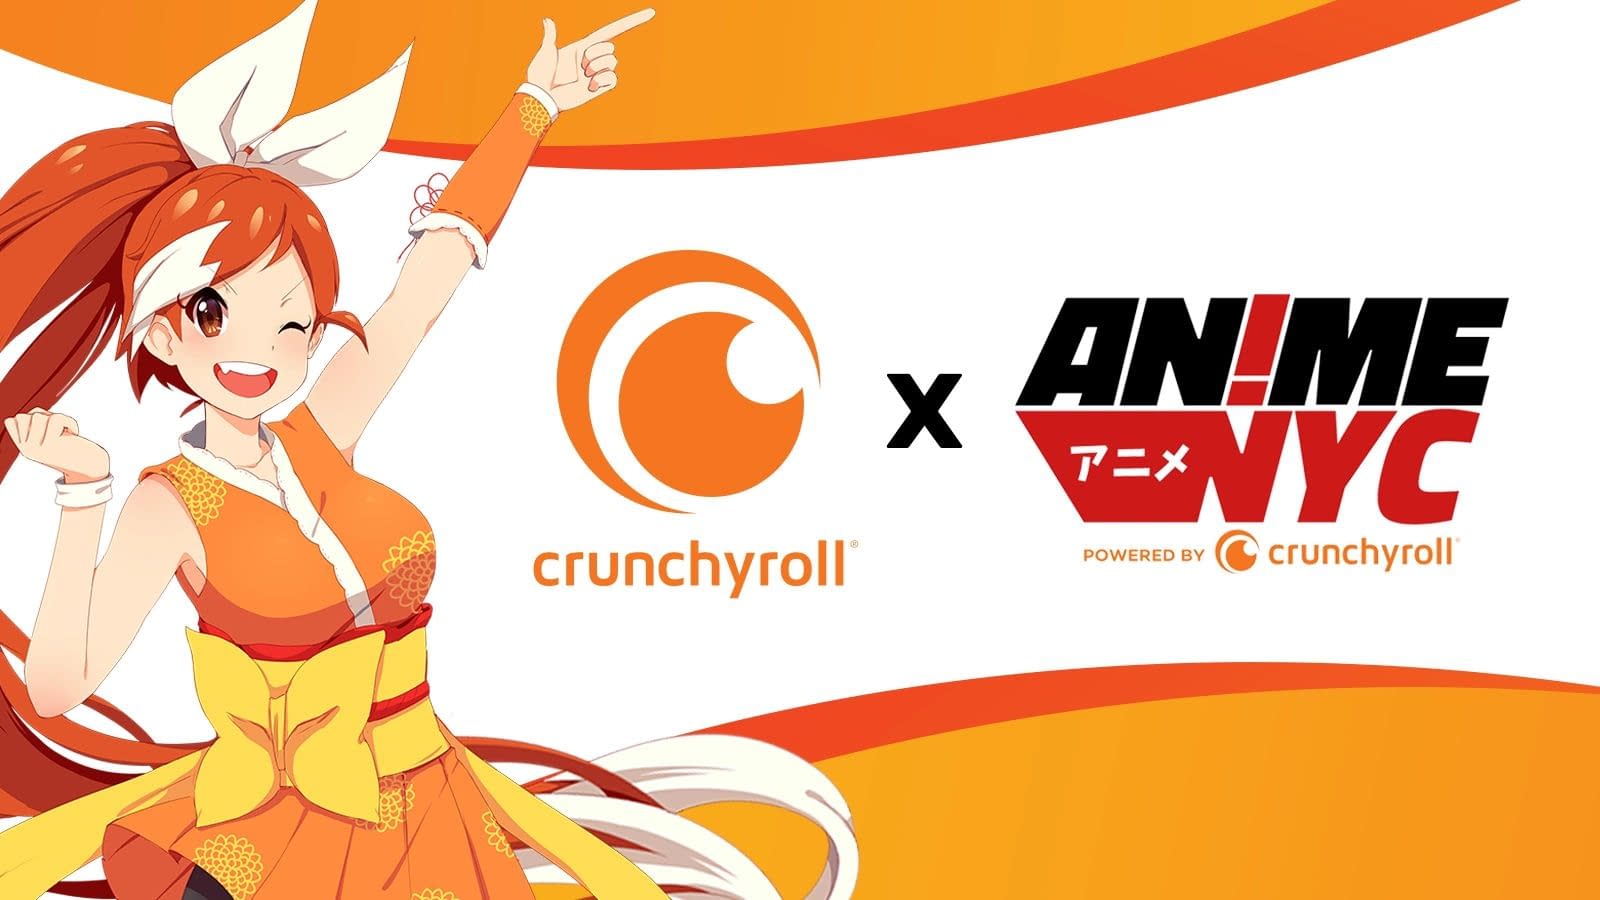 Play It Cool, Guys Reunion - Watch on Crunchyroll